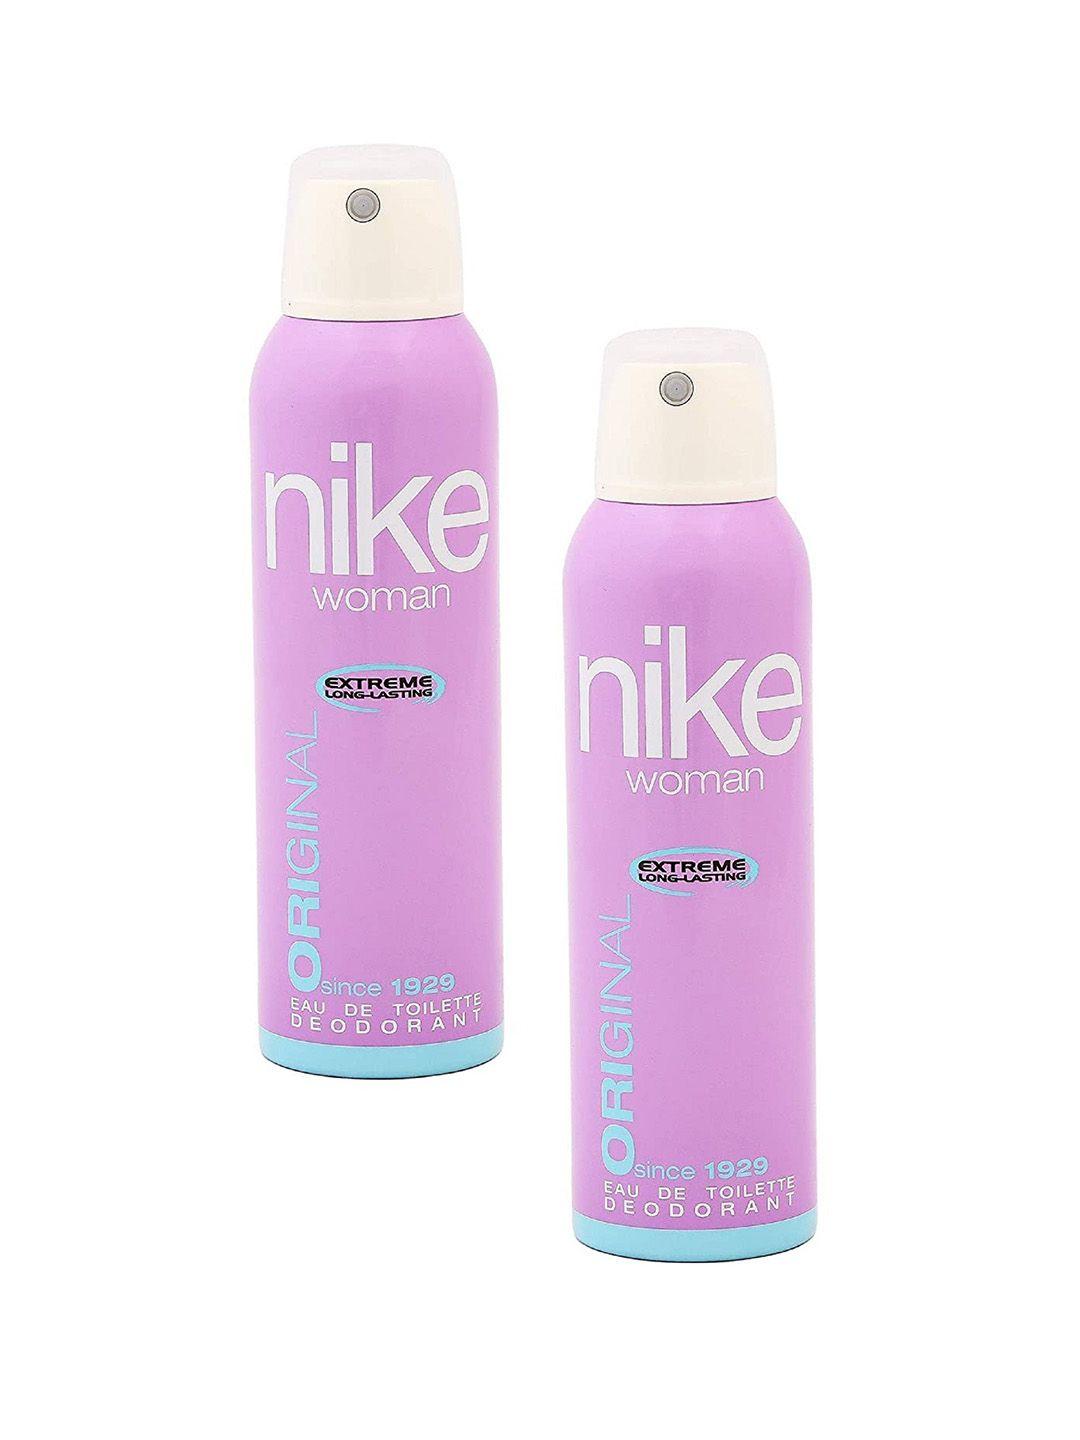 nike pack of 2 woman original deodorant - 200 ml each